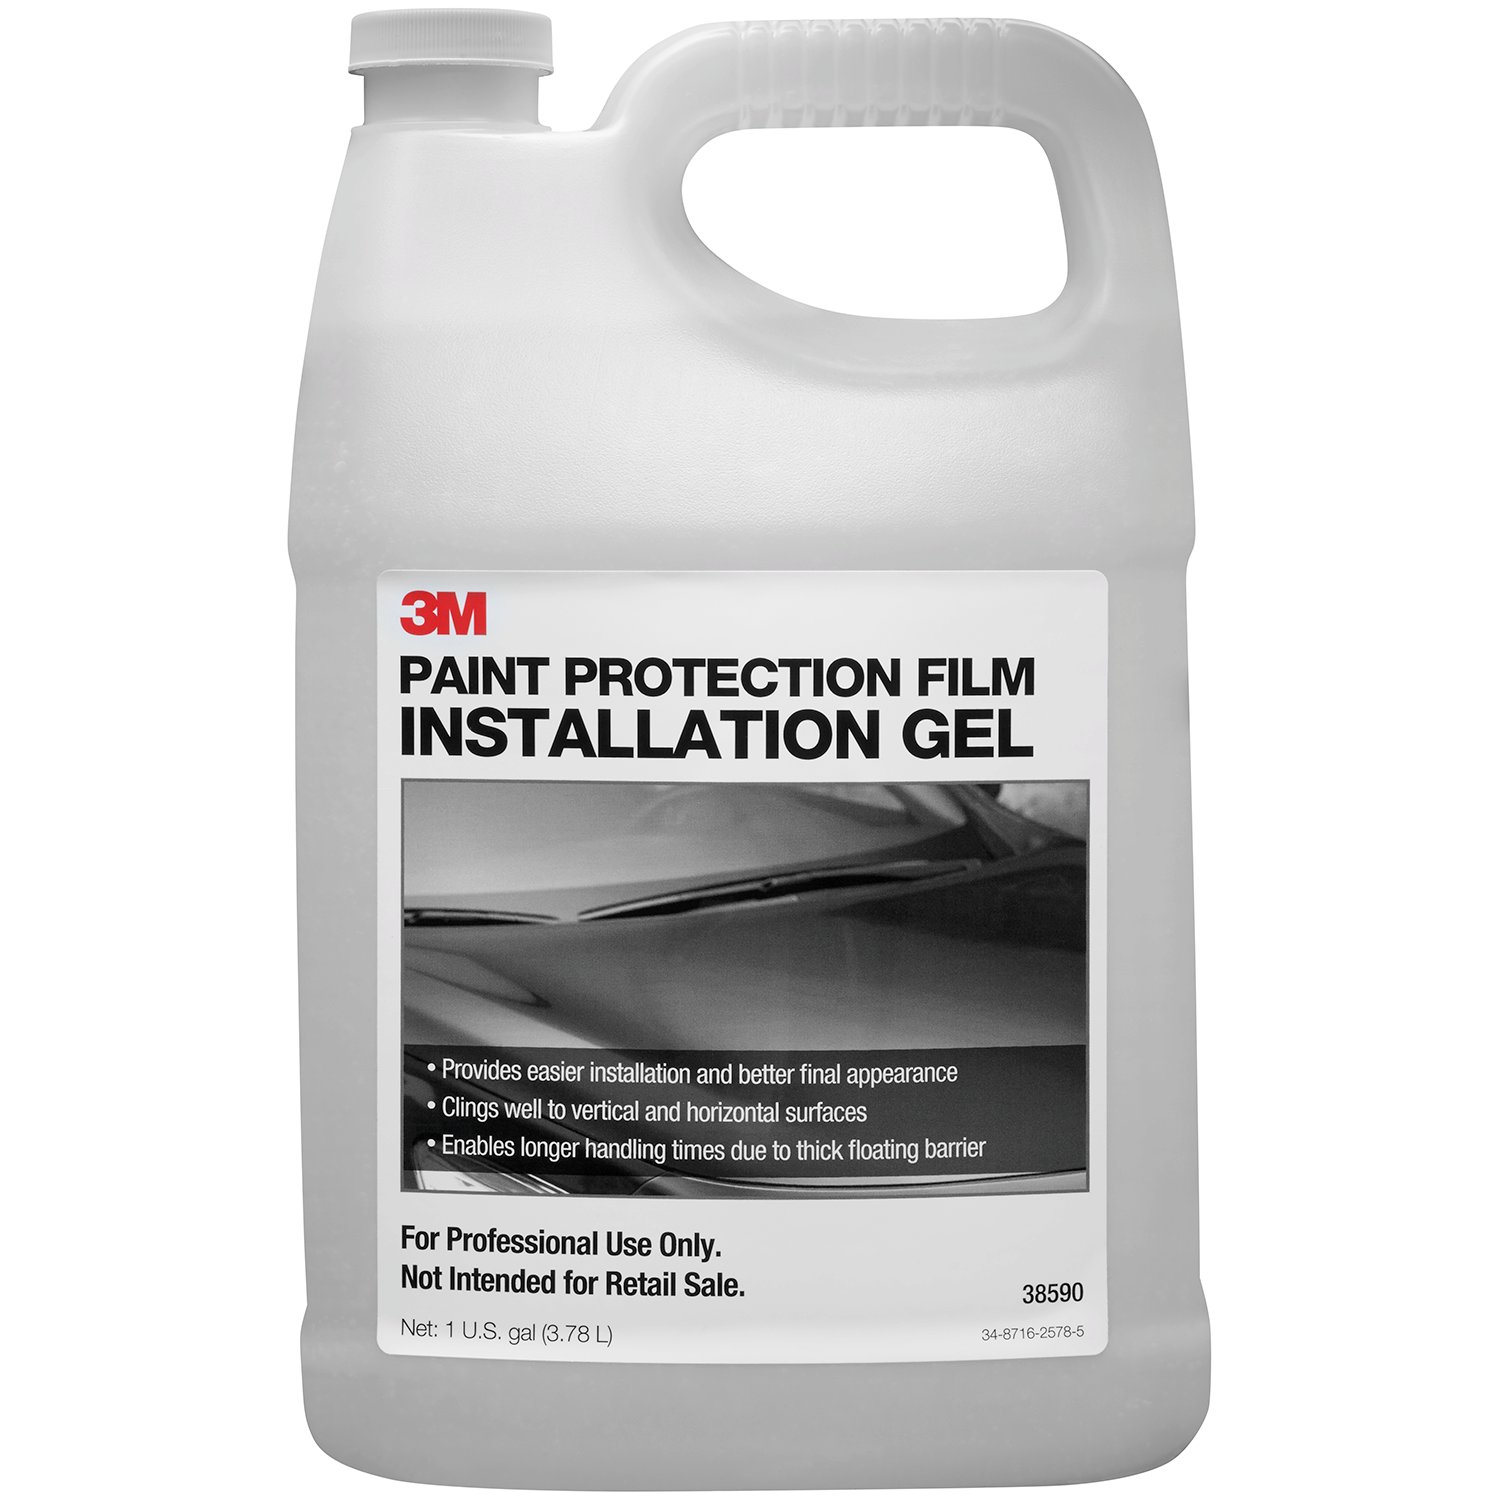 7100084531 - 3M Paint Protection Film Installation Gel, PN38590, 1 gallon, 4 per
case